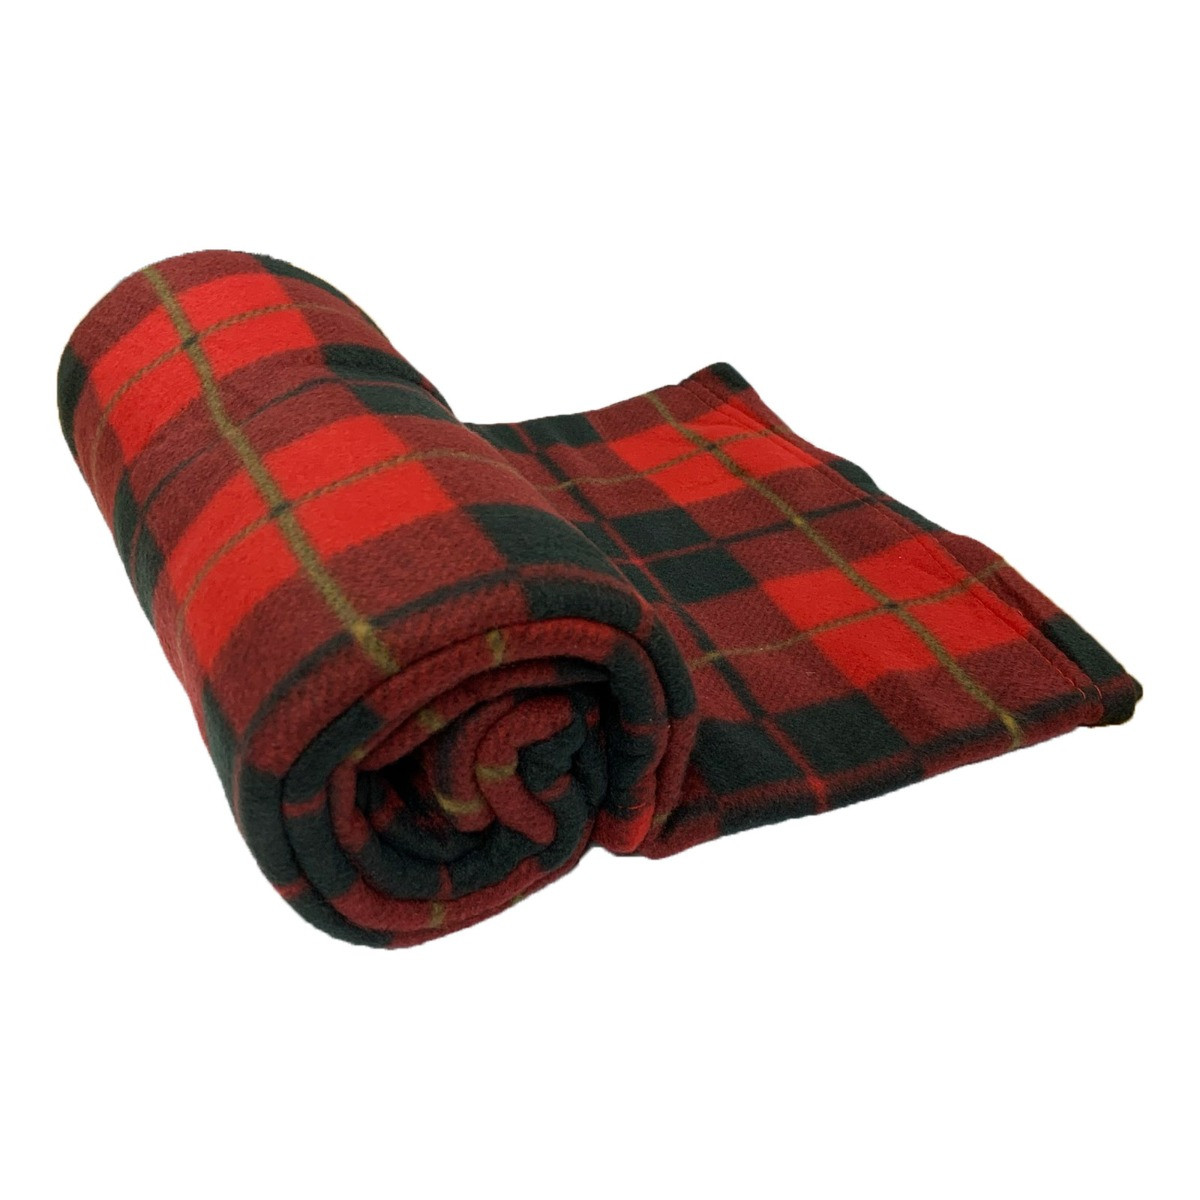 Fleece Blanket 120x150cm - Check Red>